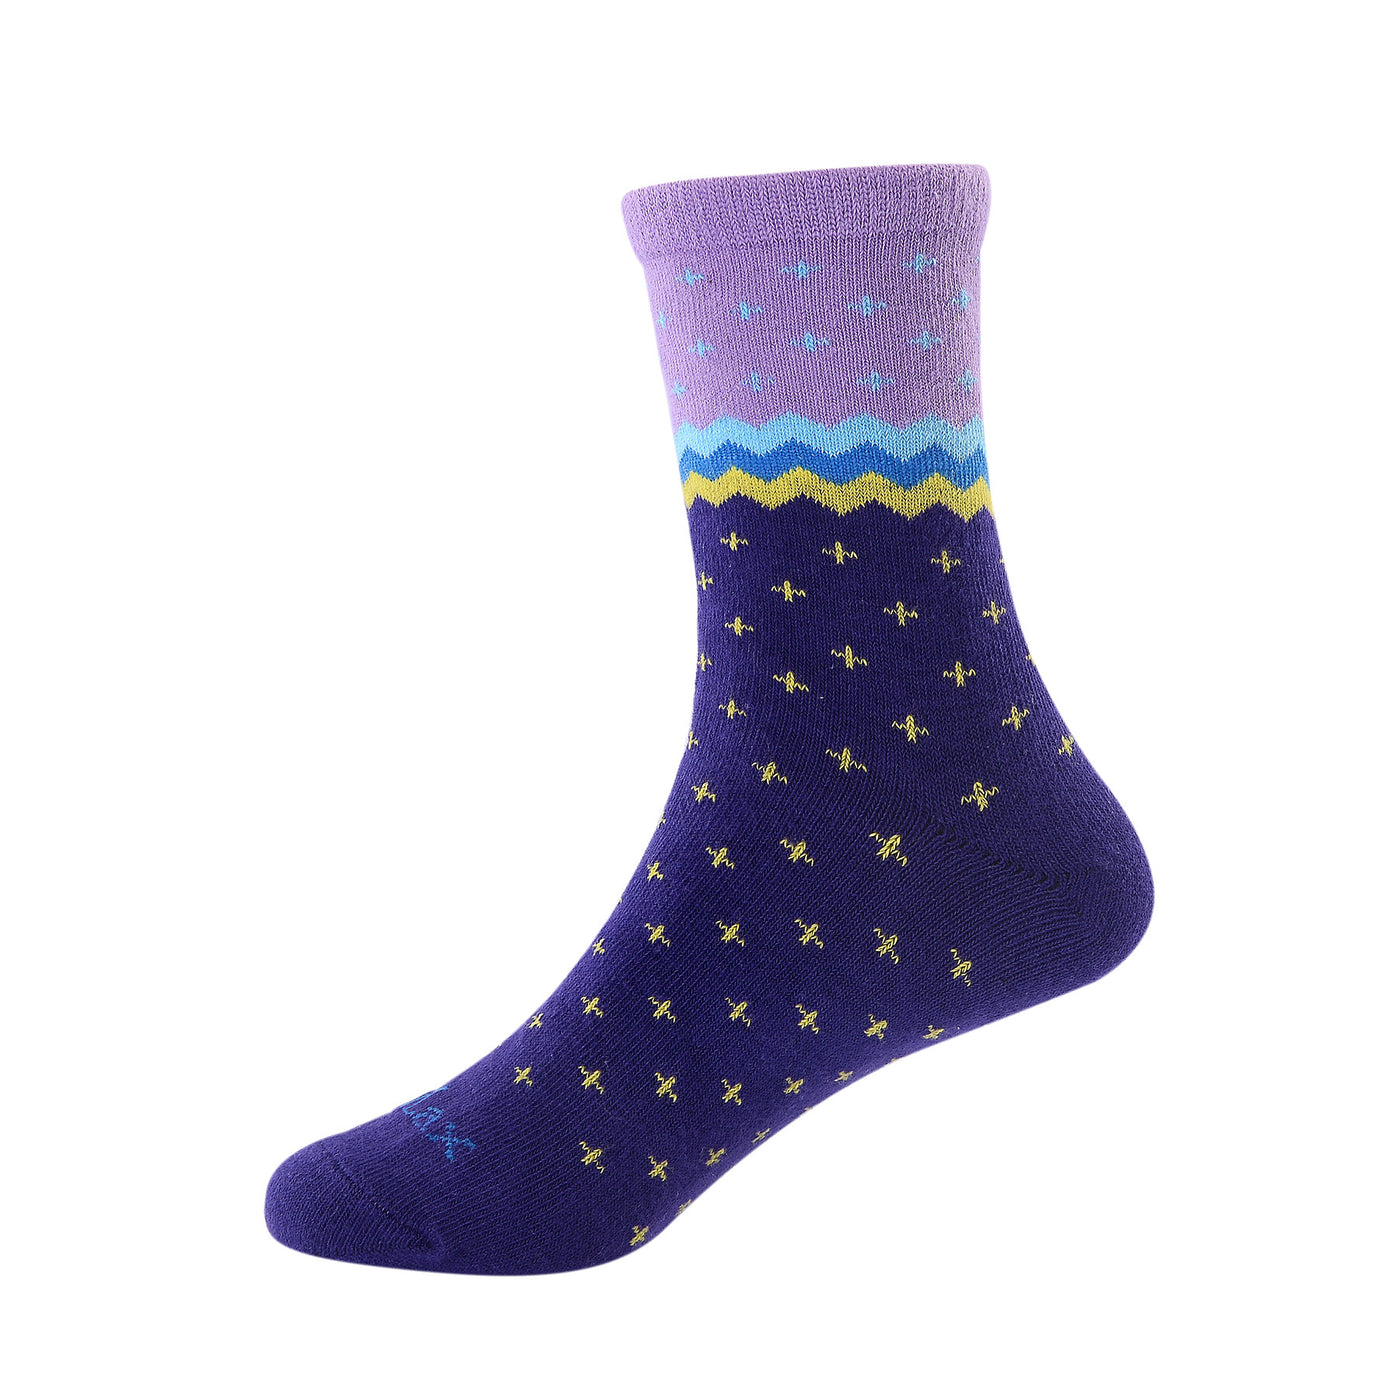 6 pares de calcetines de algodón peinado para niña - Olas marinas - Talla UK Junior 9-11.5/Europa 27-30